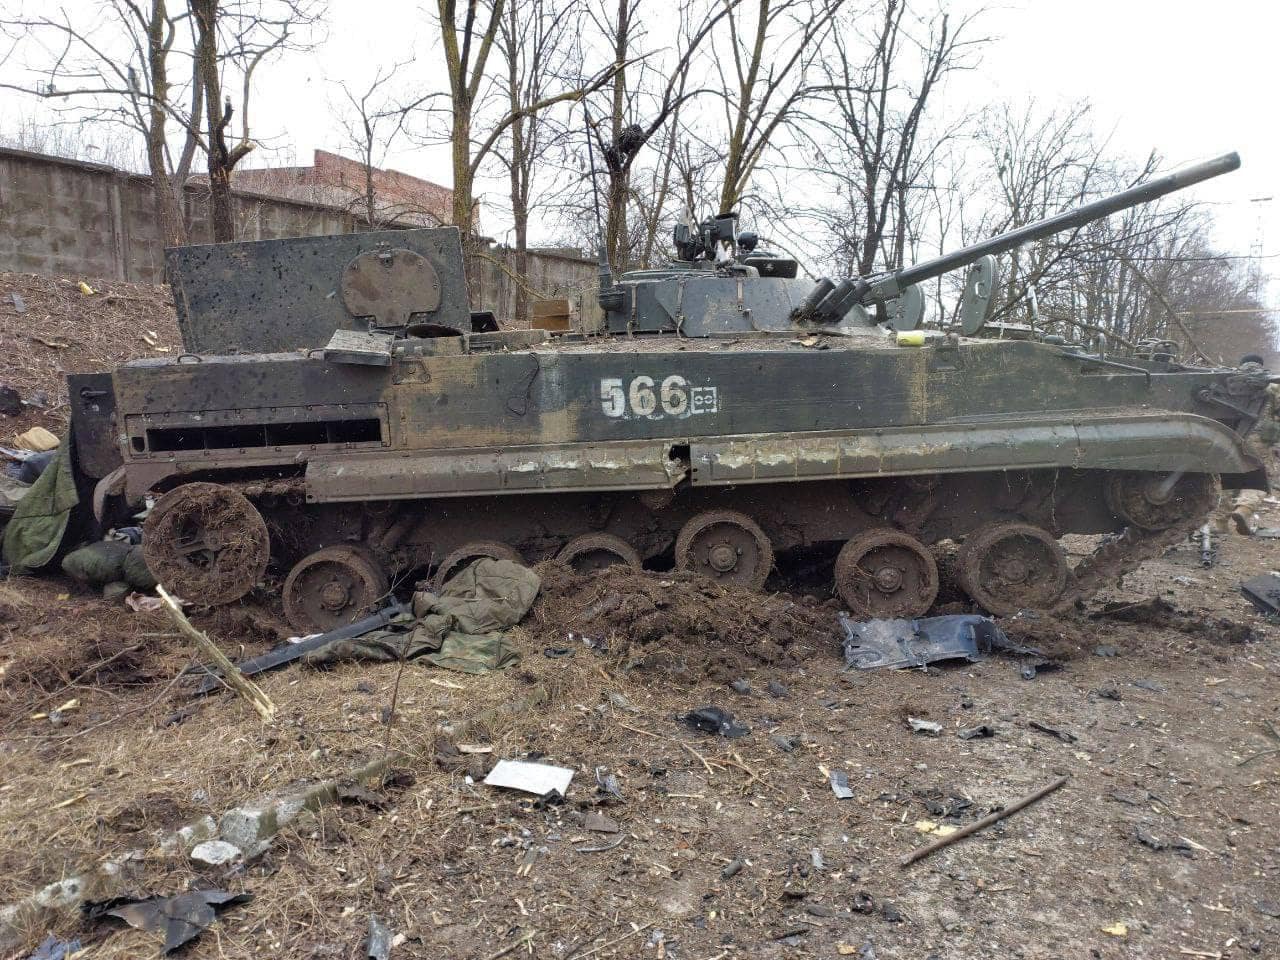 Tanque ruso destruido en Mariupol, Ucrania Foto Mvs.gov.ua CC BY 4.0 vía Wikimedia Commons